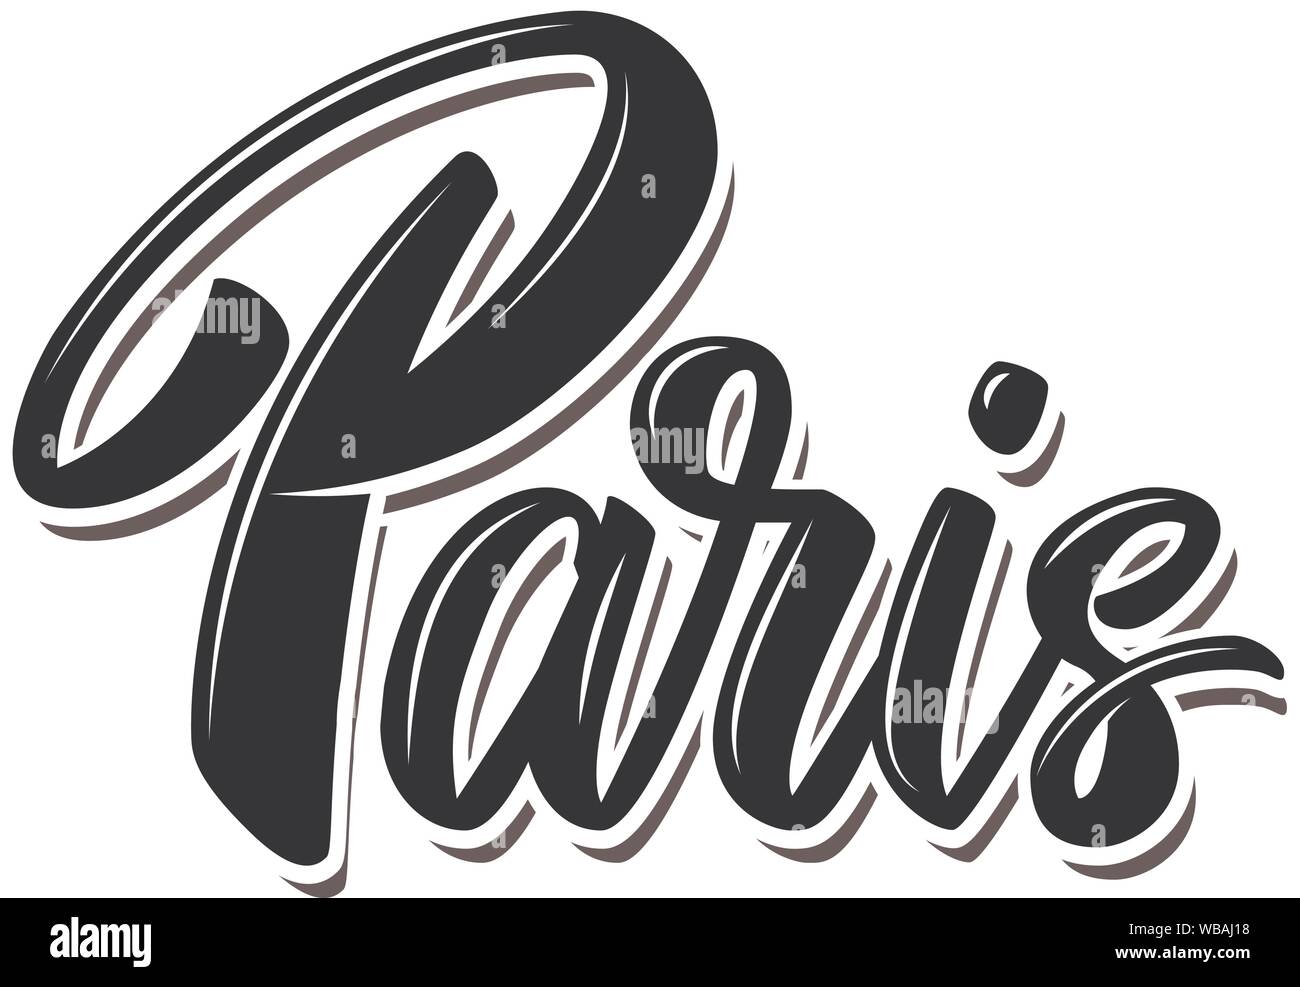 Paris (capital of France).  Lettering phrase on white background. Design element for poster, banner, t shirt, emblem. Vector illustration Stock Vector